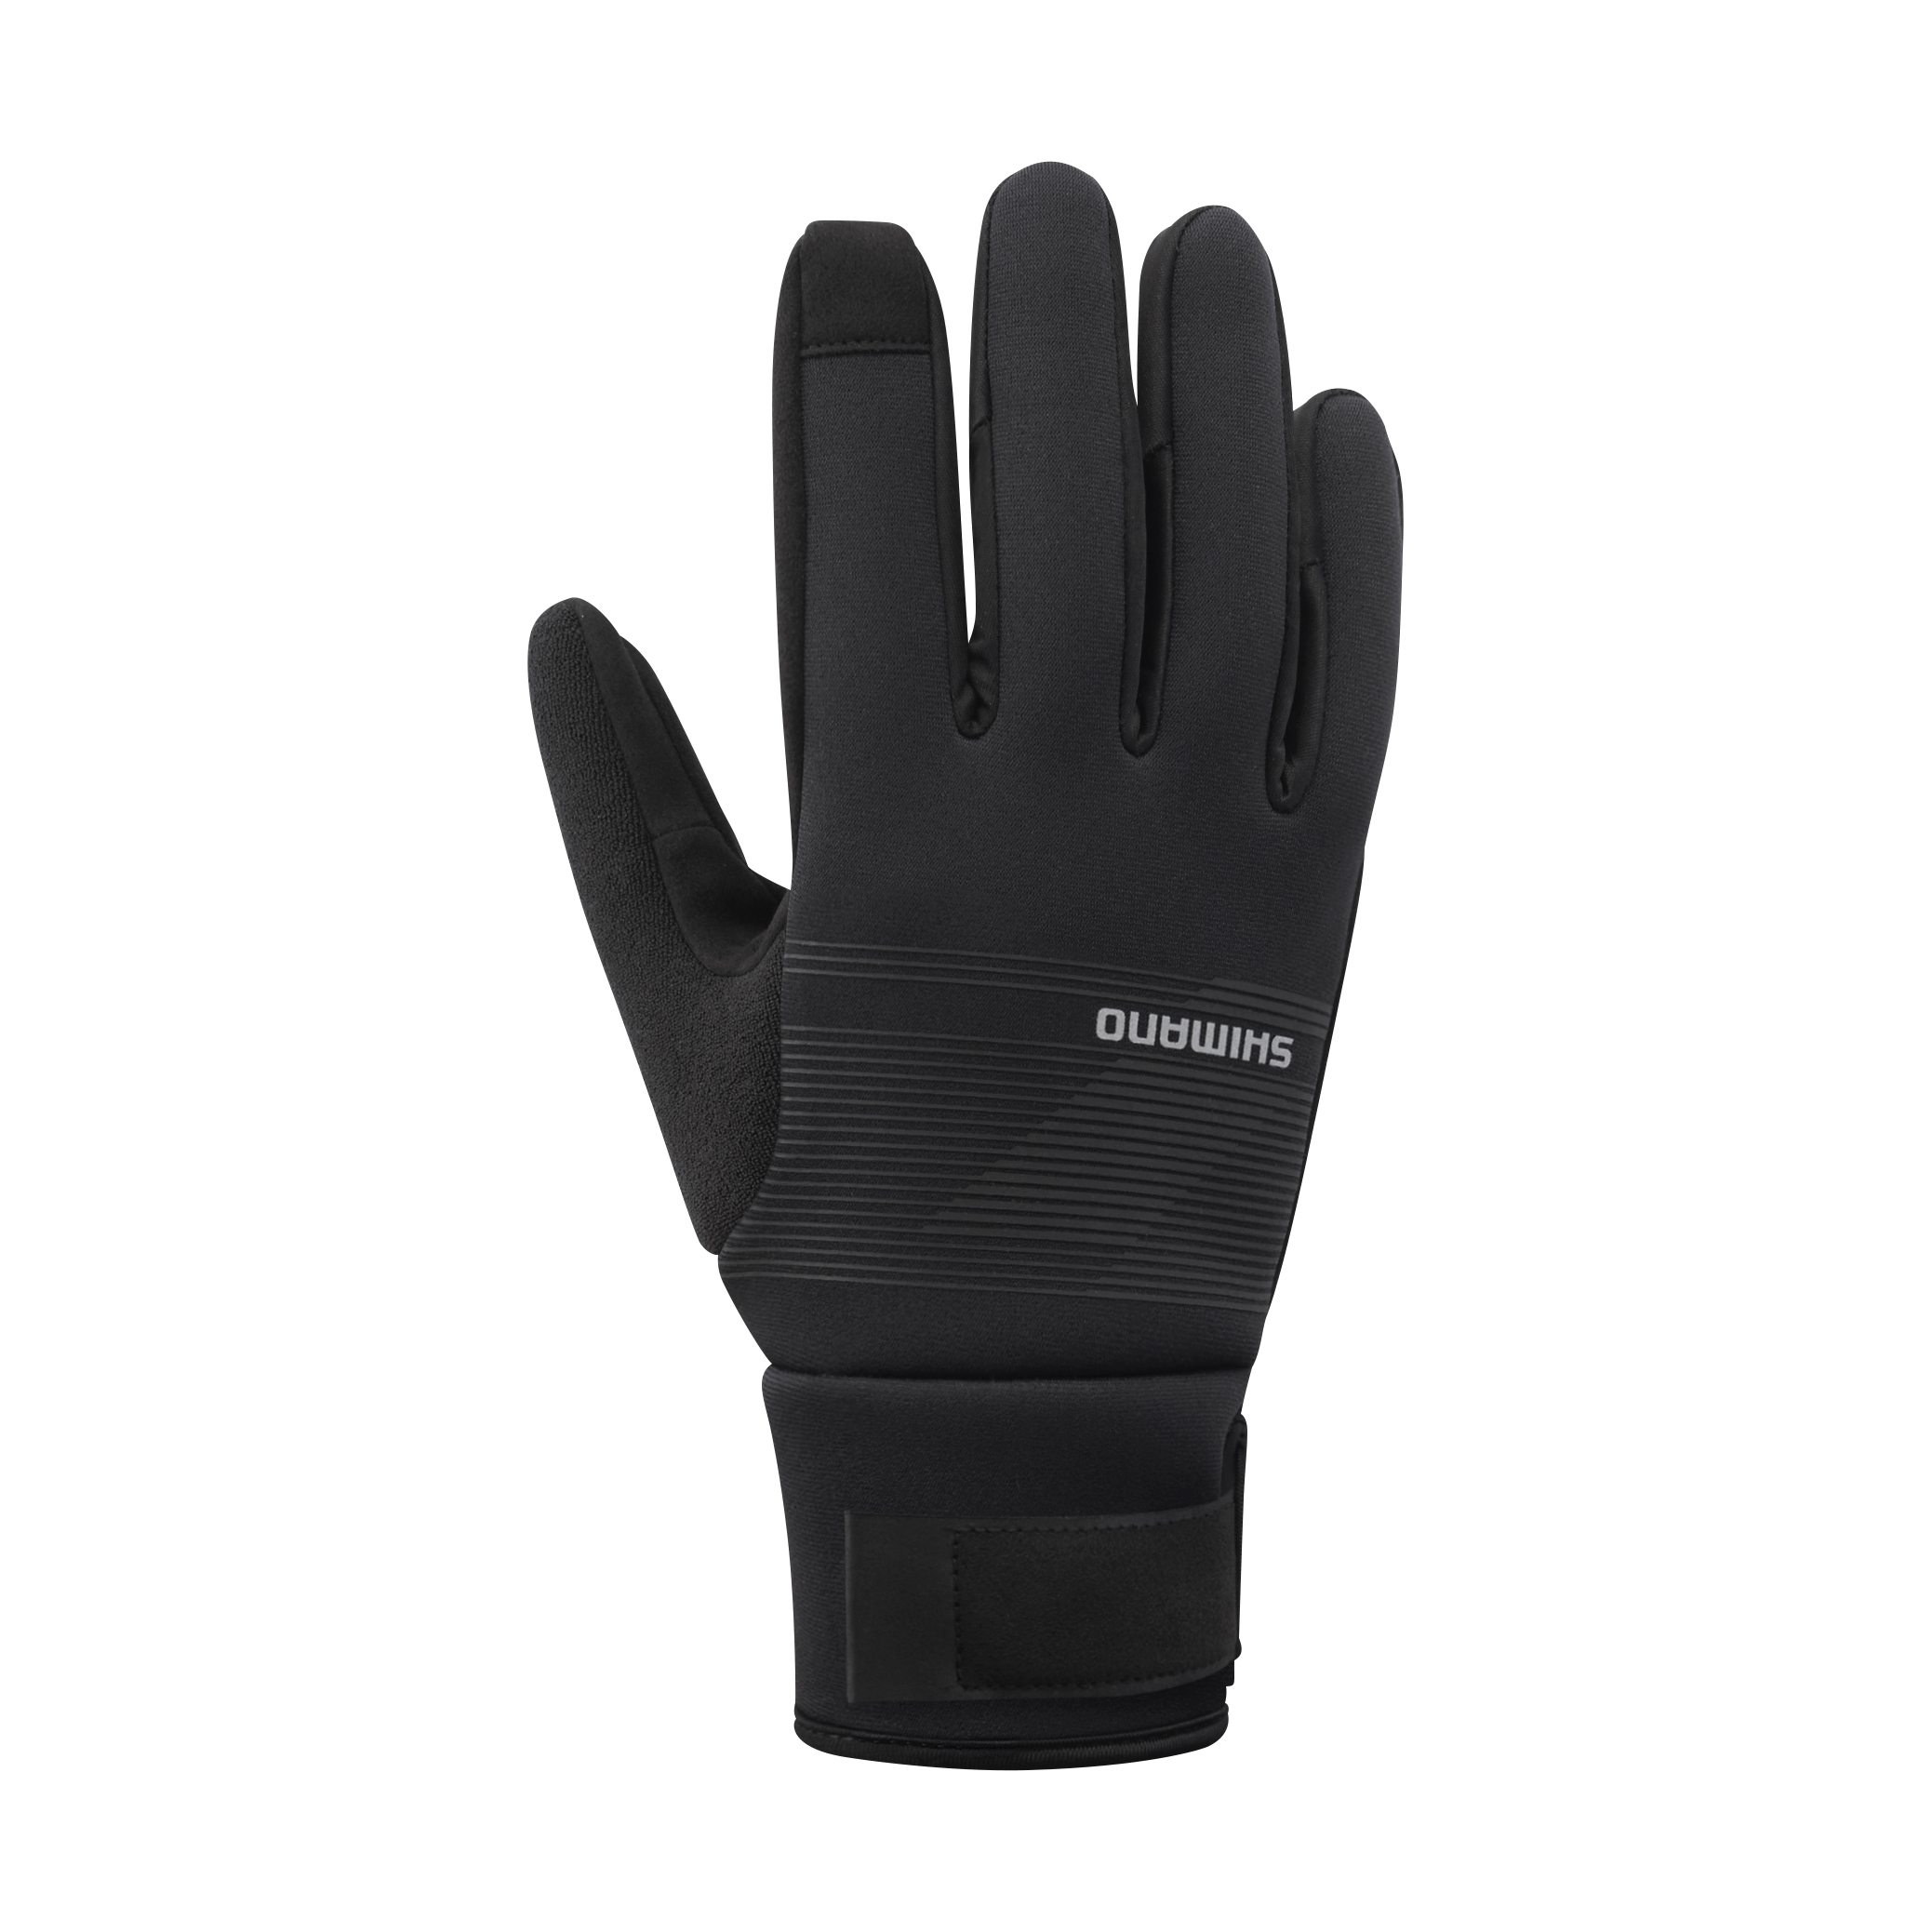 SHIMANO WINDBREAK THERMAL rukavice (5-10°C), černá, M